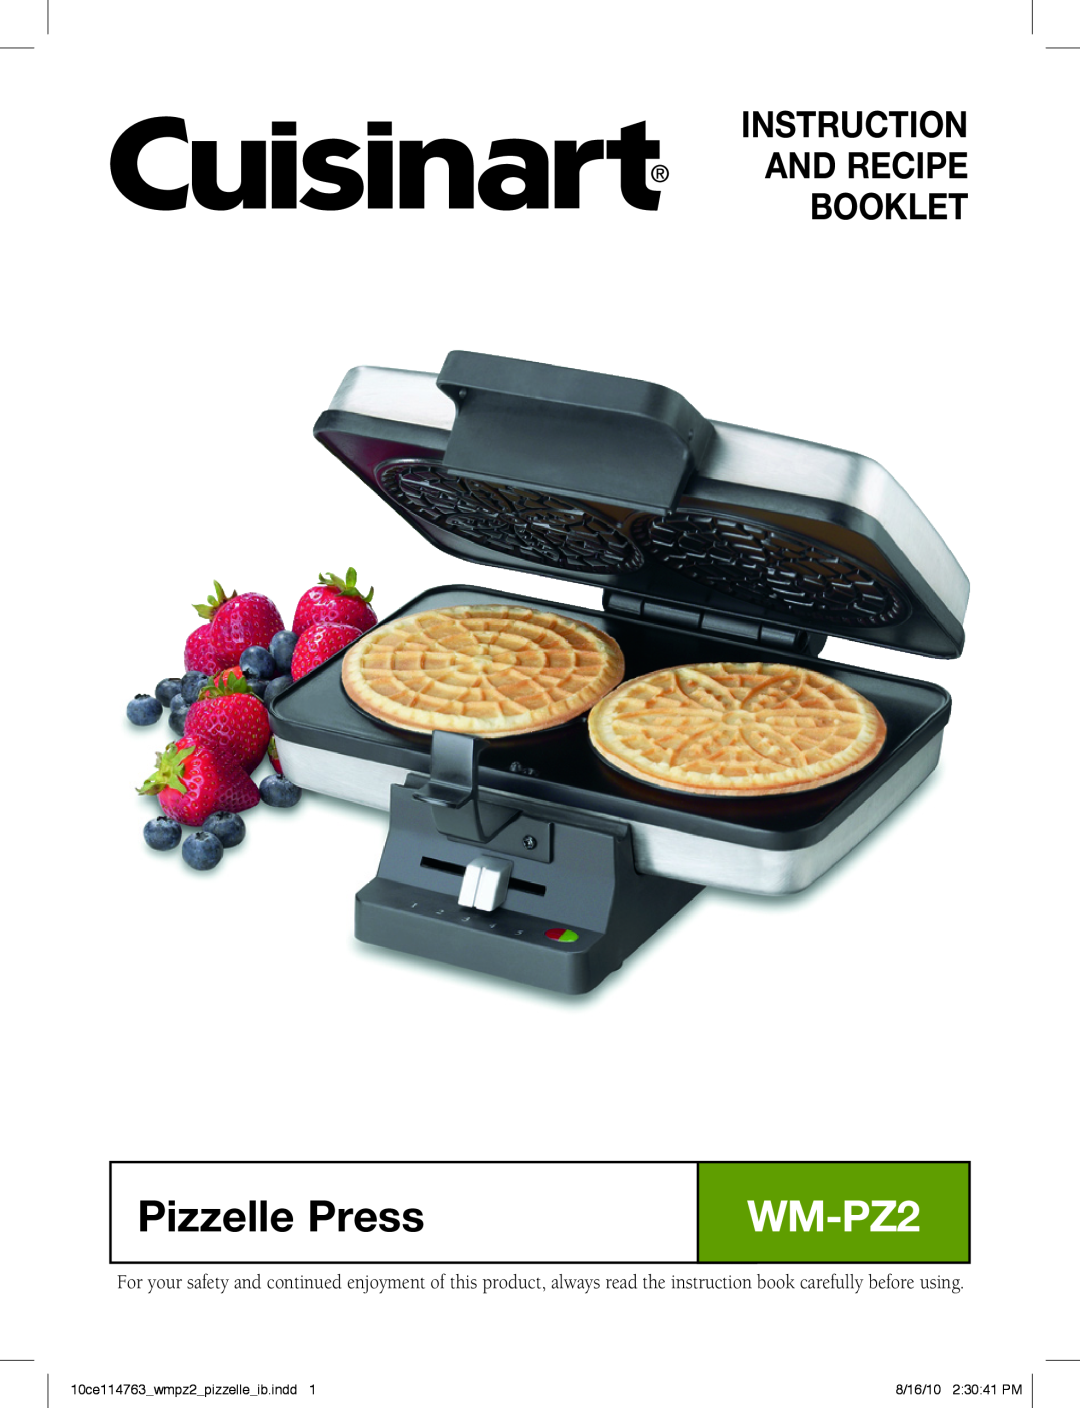 Cuisinart manual Pizzelle Press, WM-PZ2C, Instruction And Recipe Booklet 